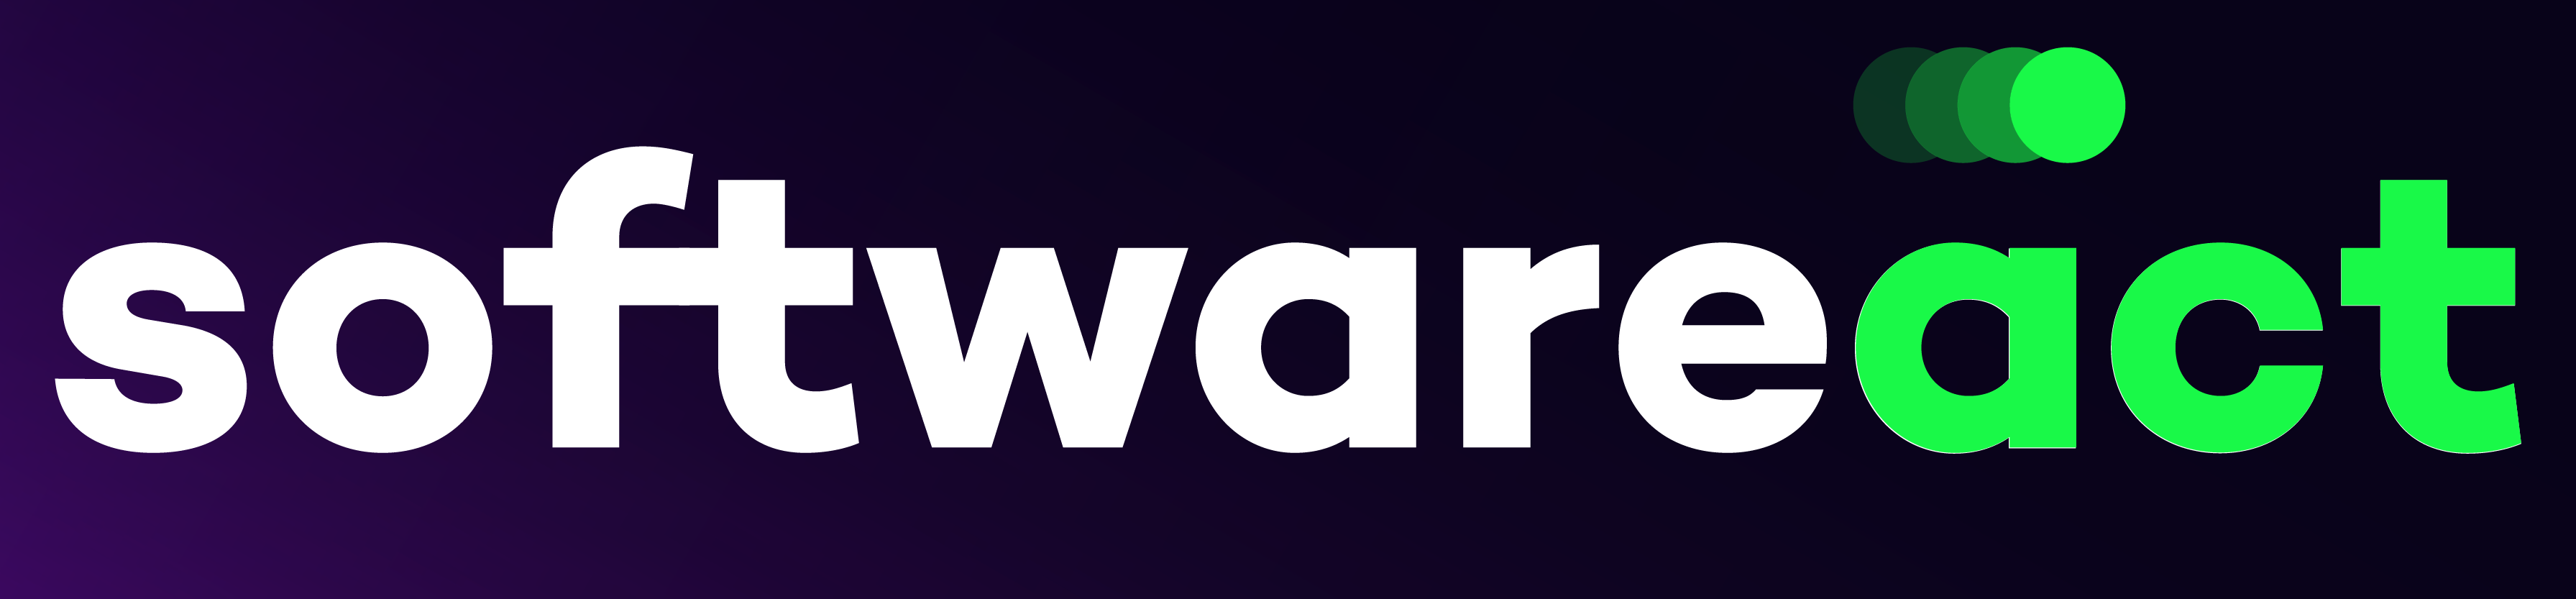 Softwareact logo